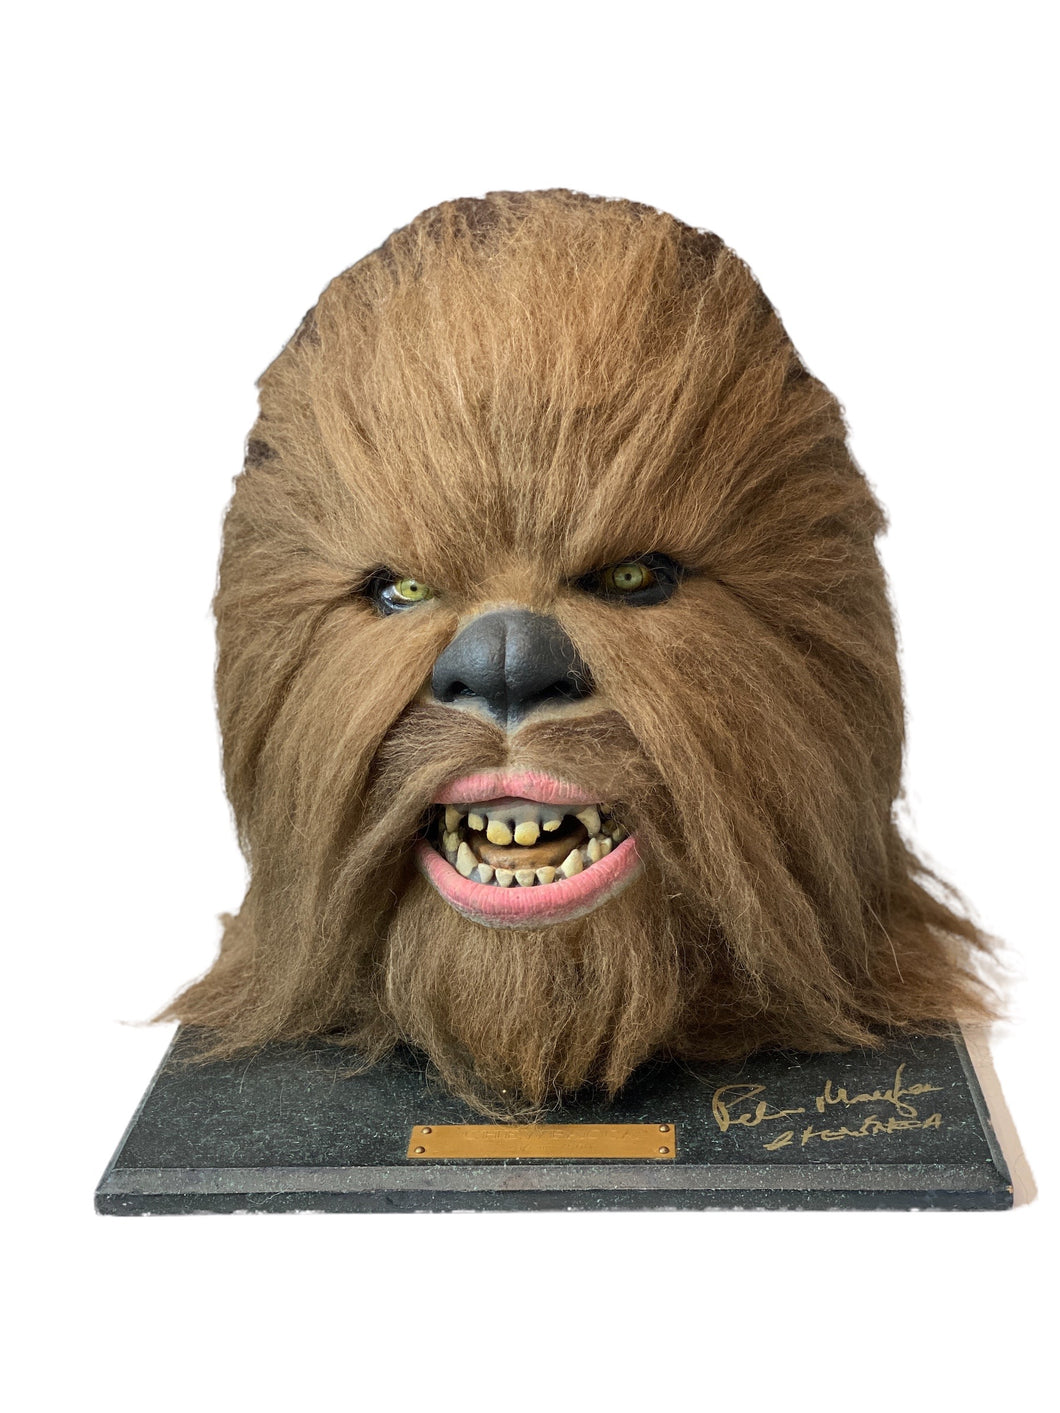 Busto Chewbacca / Star Wars / Peter Mayhew